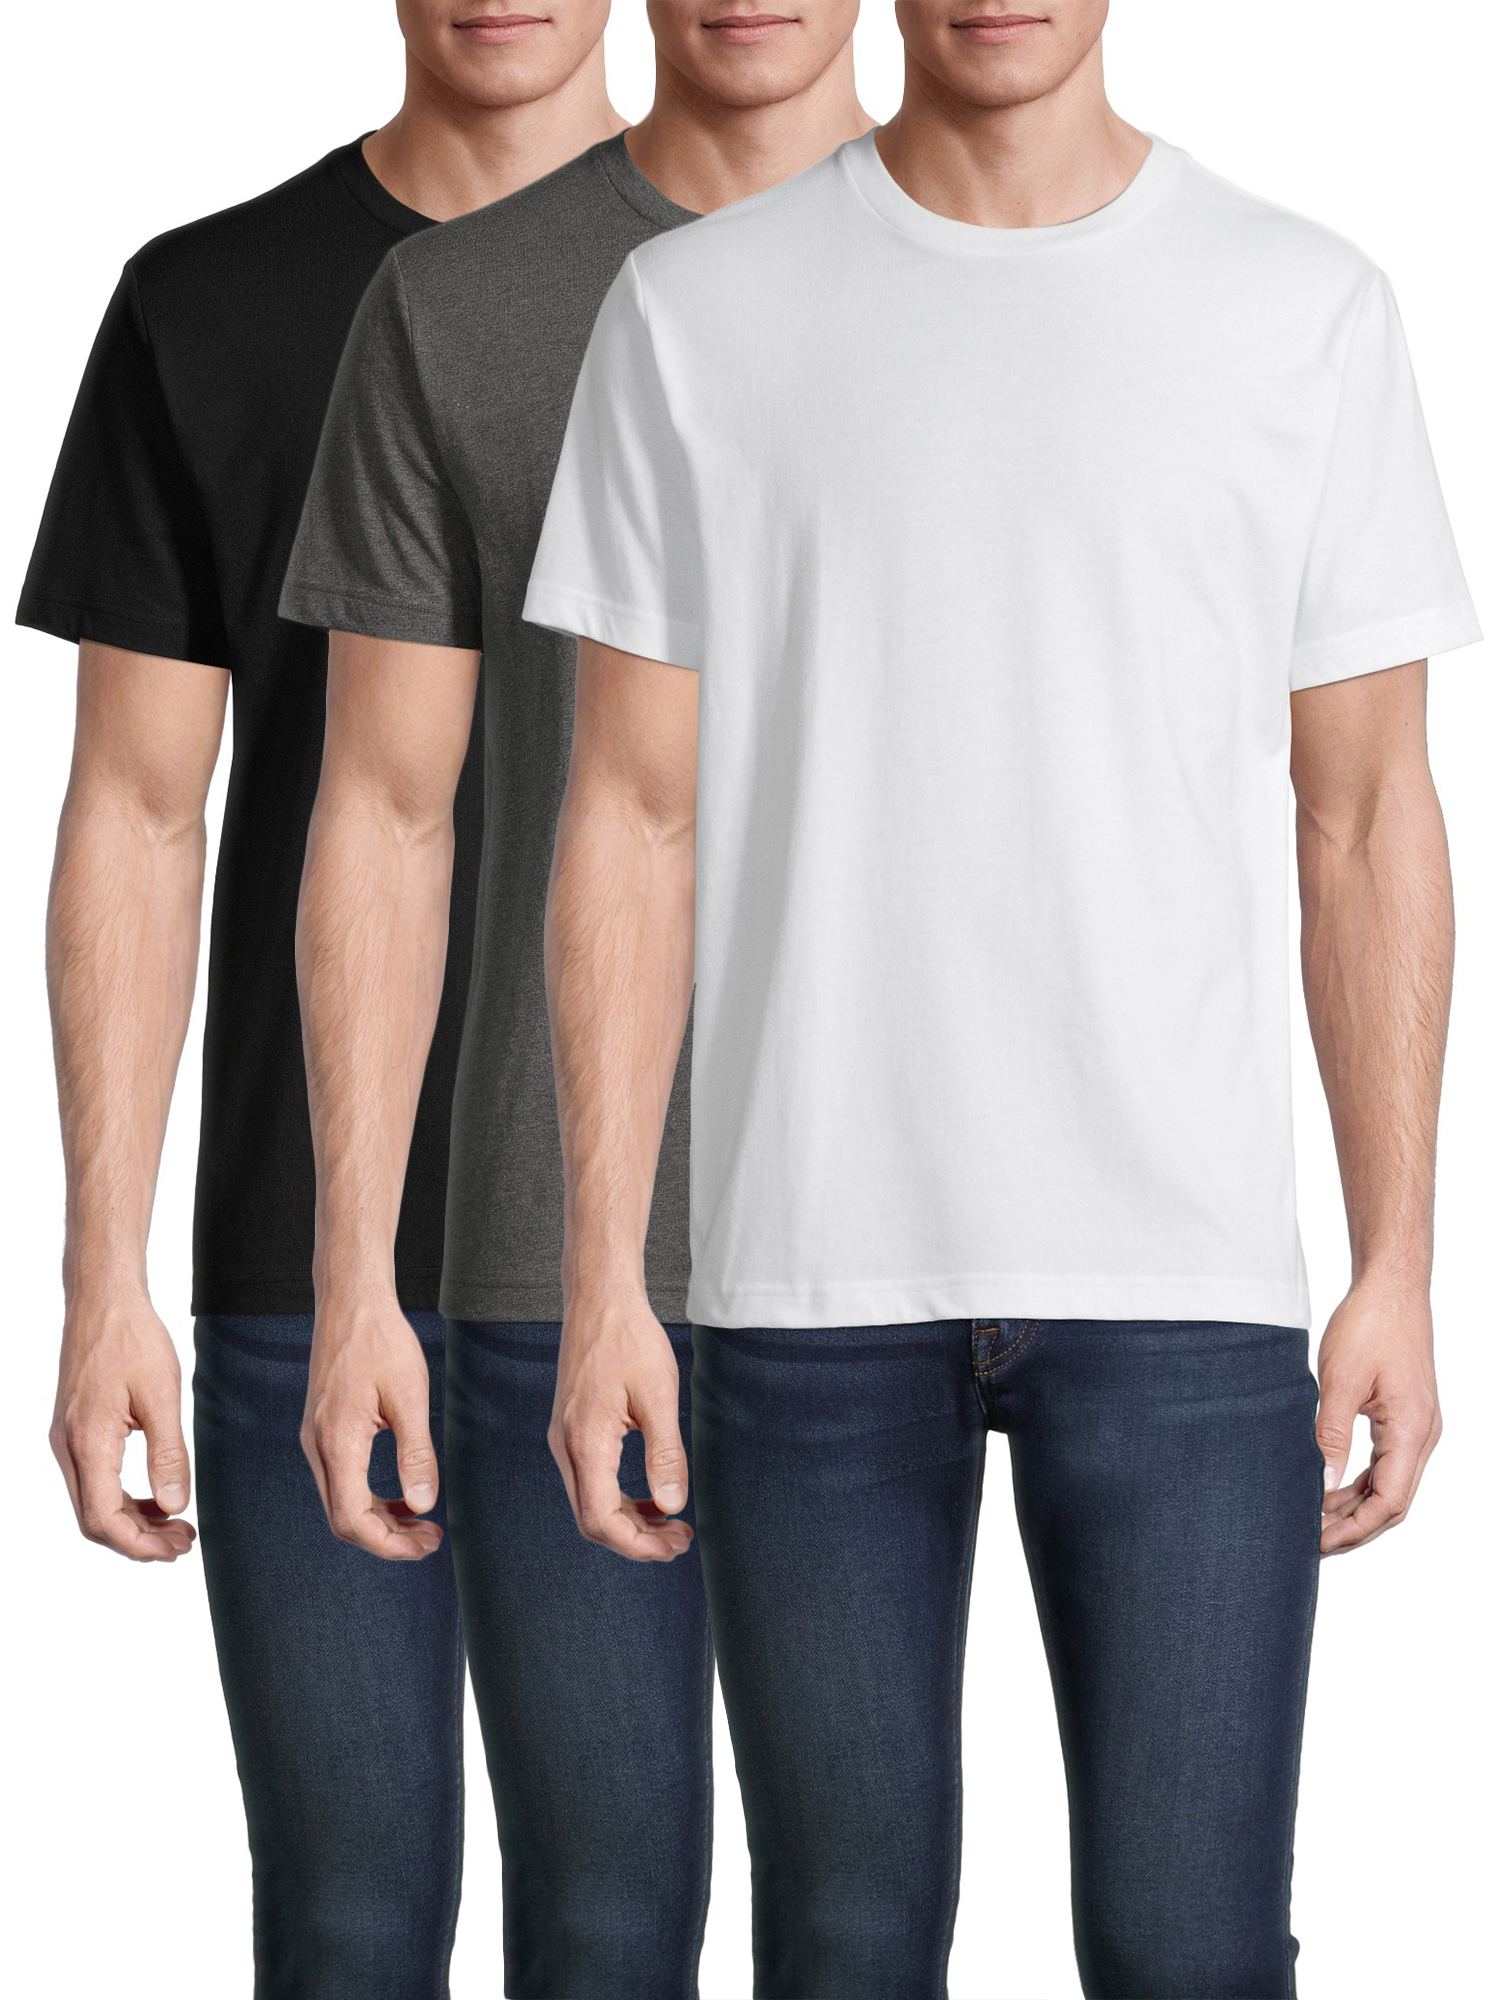 George Men's Short Sleeve Solid Crewneck T-Shirt, 3-Pack - image 1 of 4